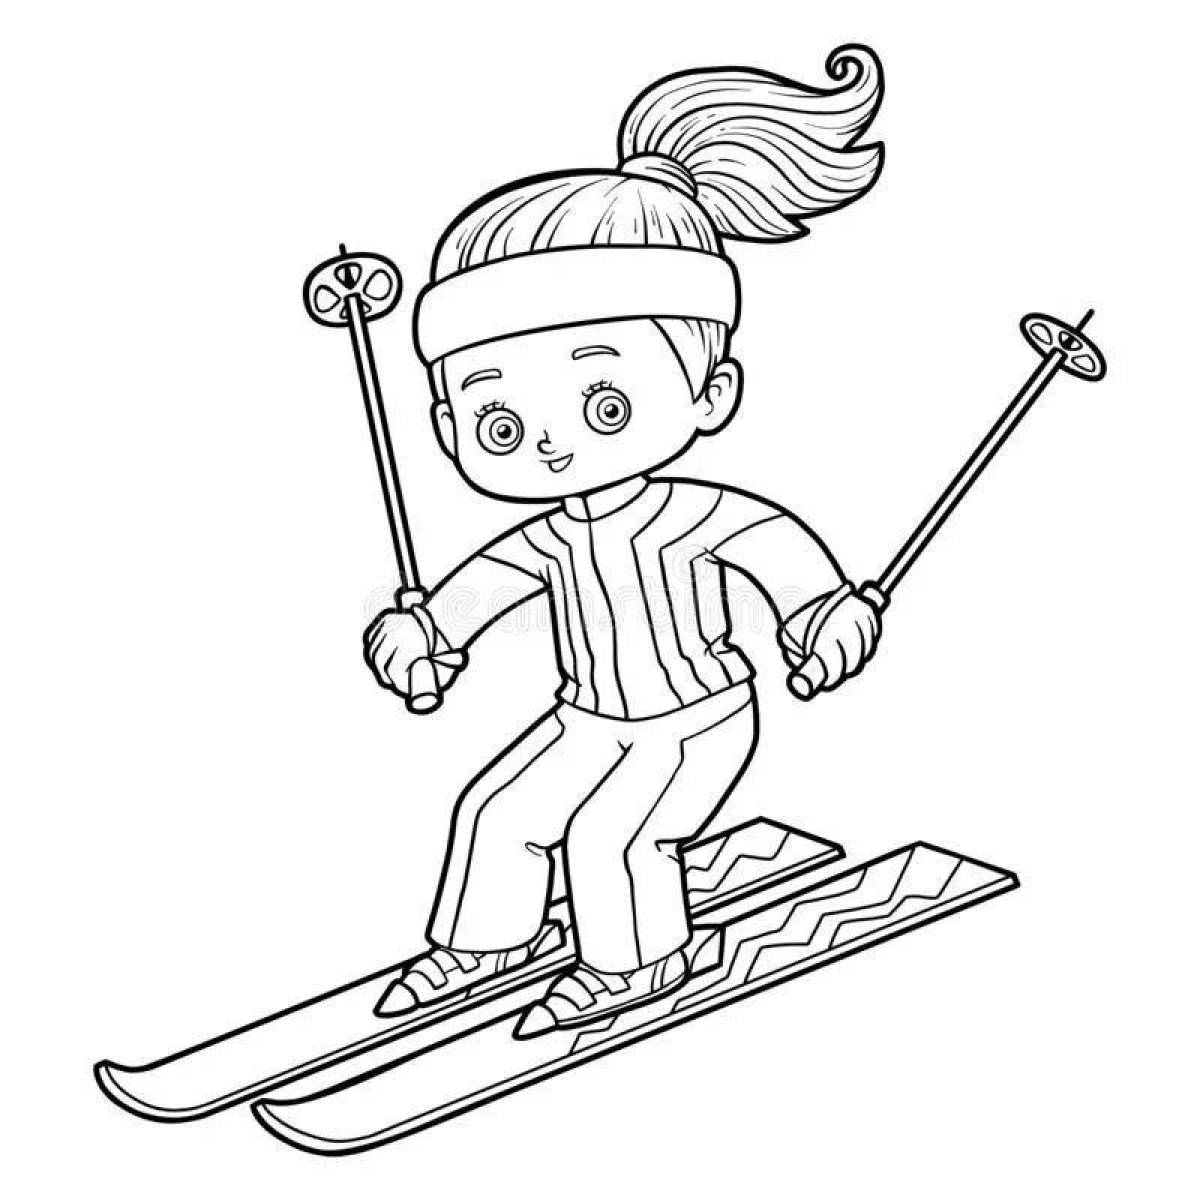 Child on skis #11